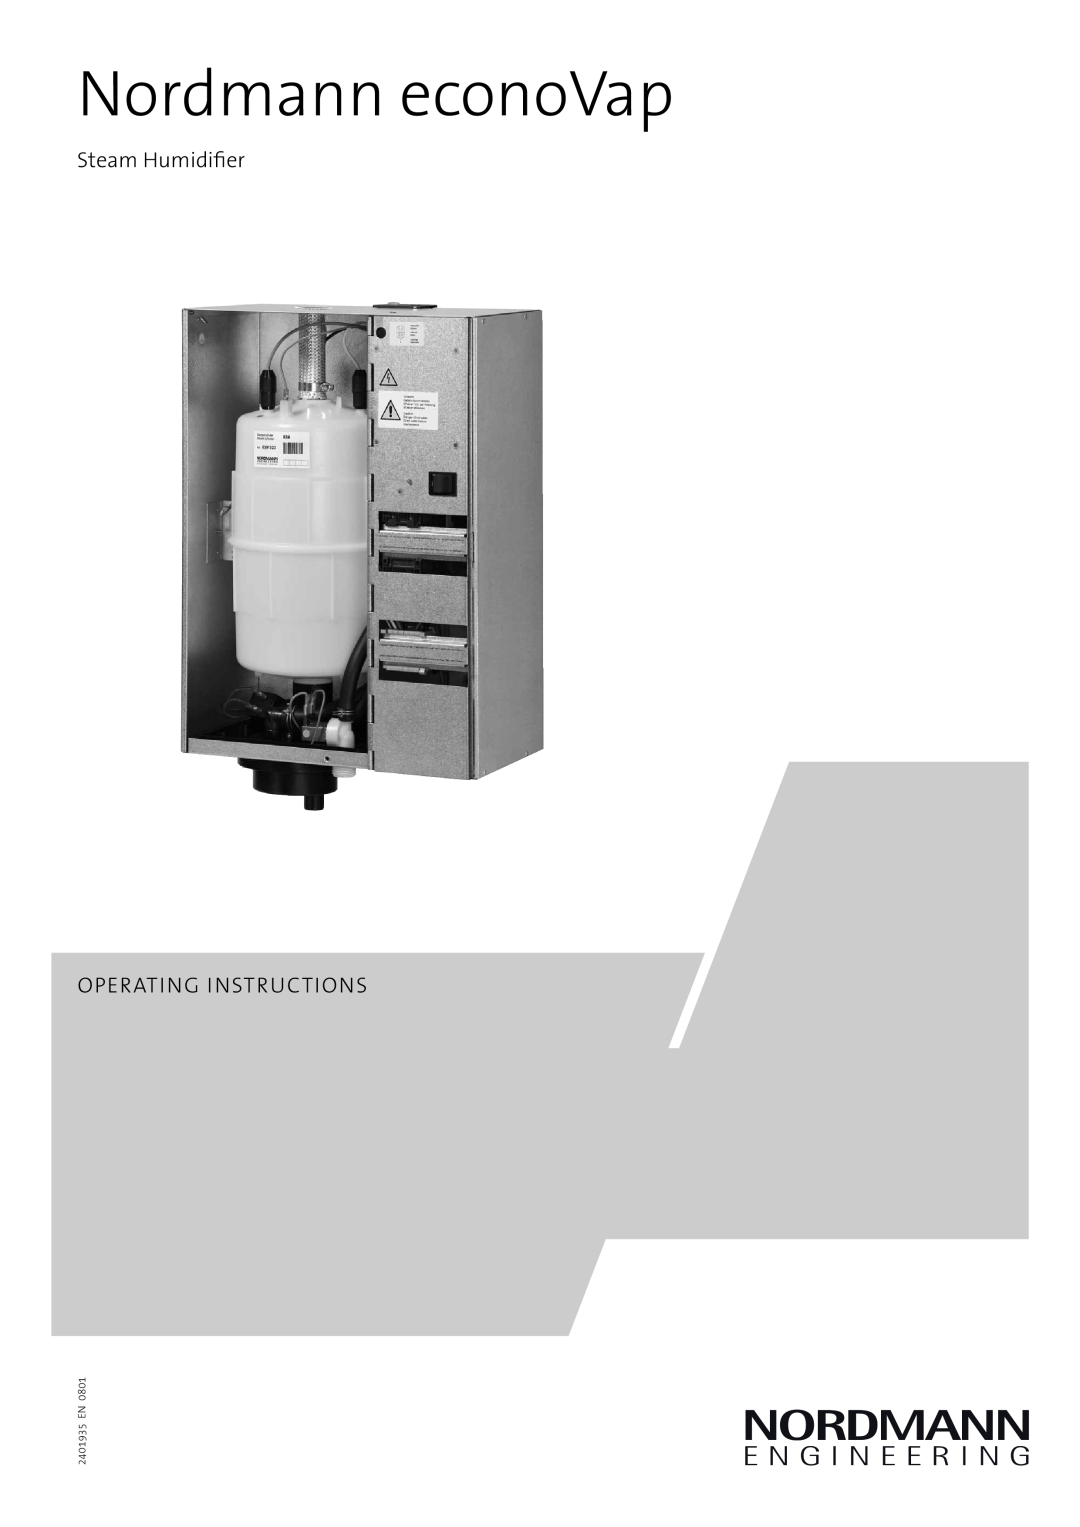 Nordmende 2401935EN0801 manual Nordmann econoVap, E N G I N E E R I N G, Steam Humidifier Operating Instructions 